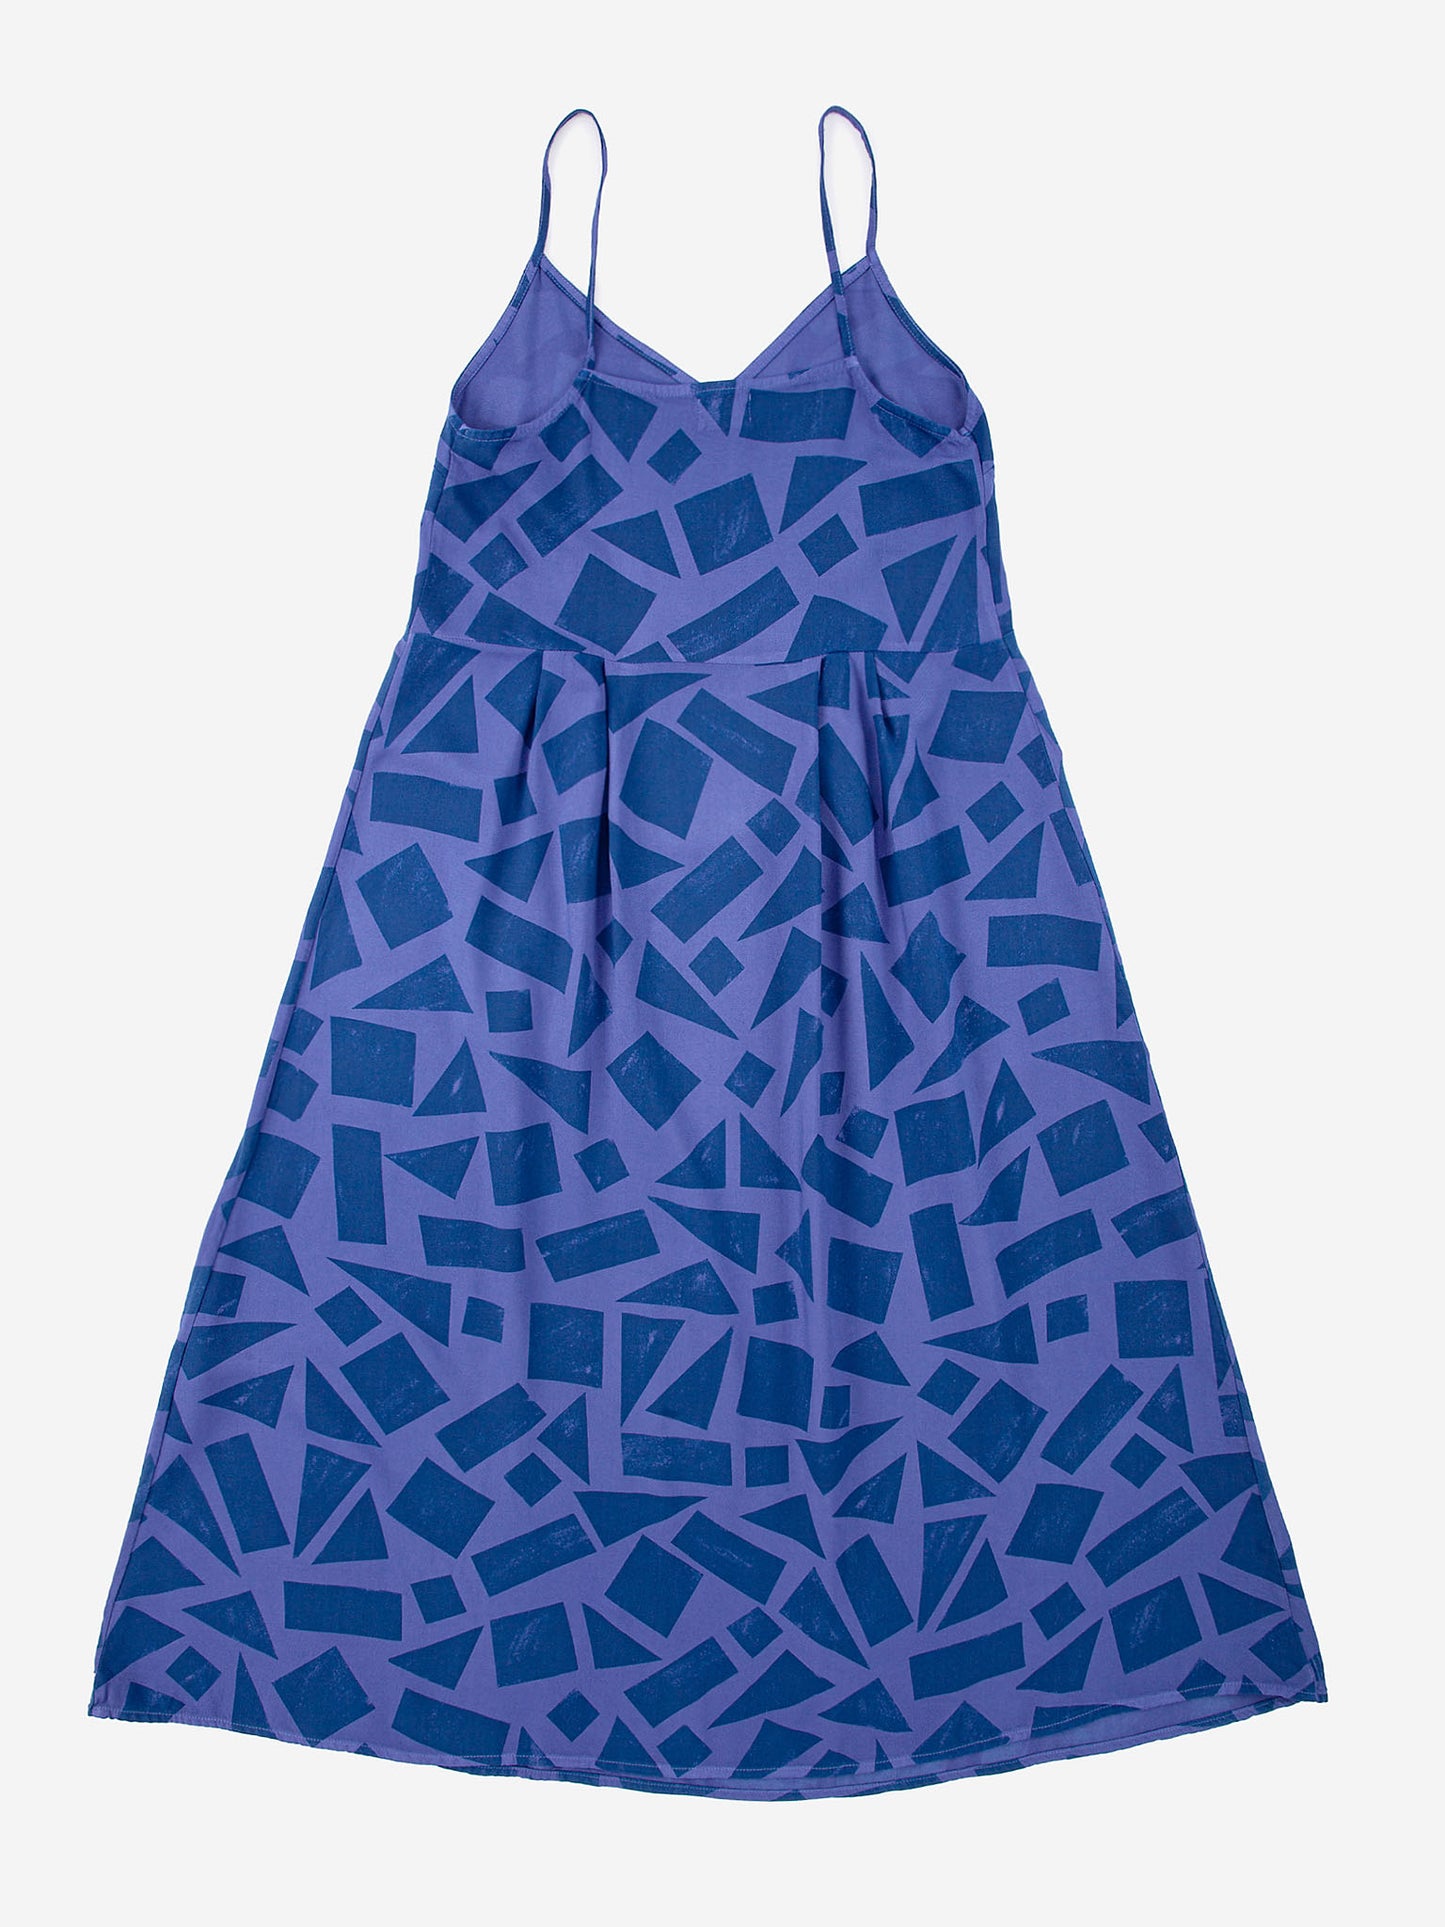 Geometric all over dress